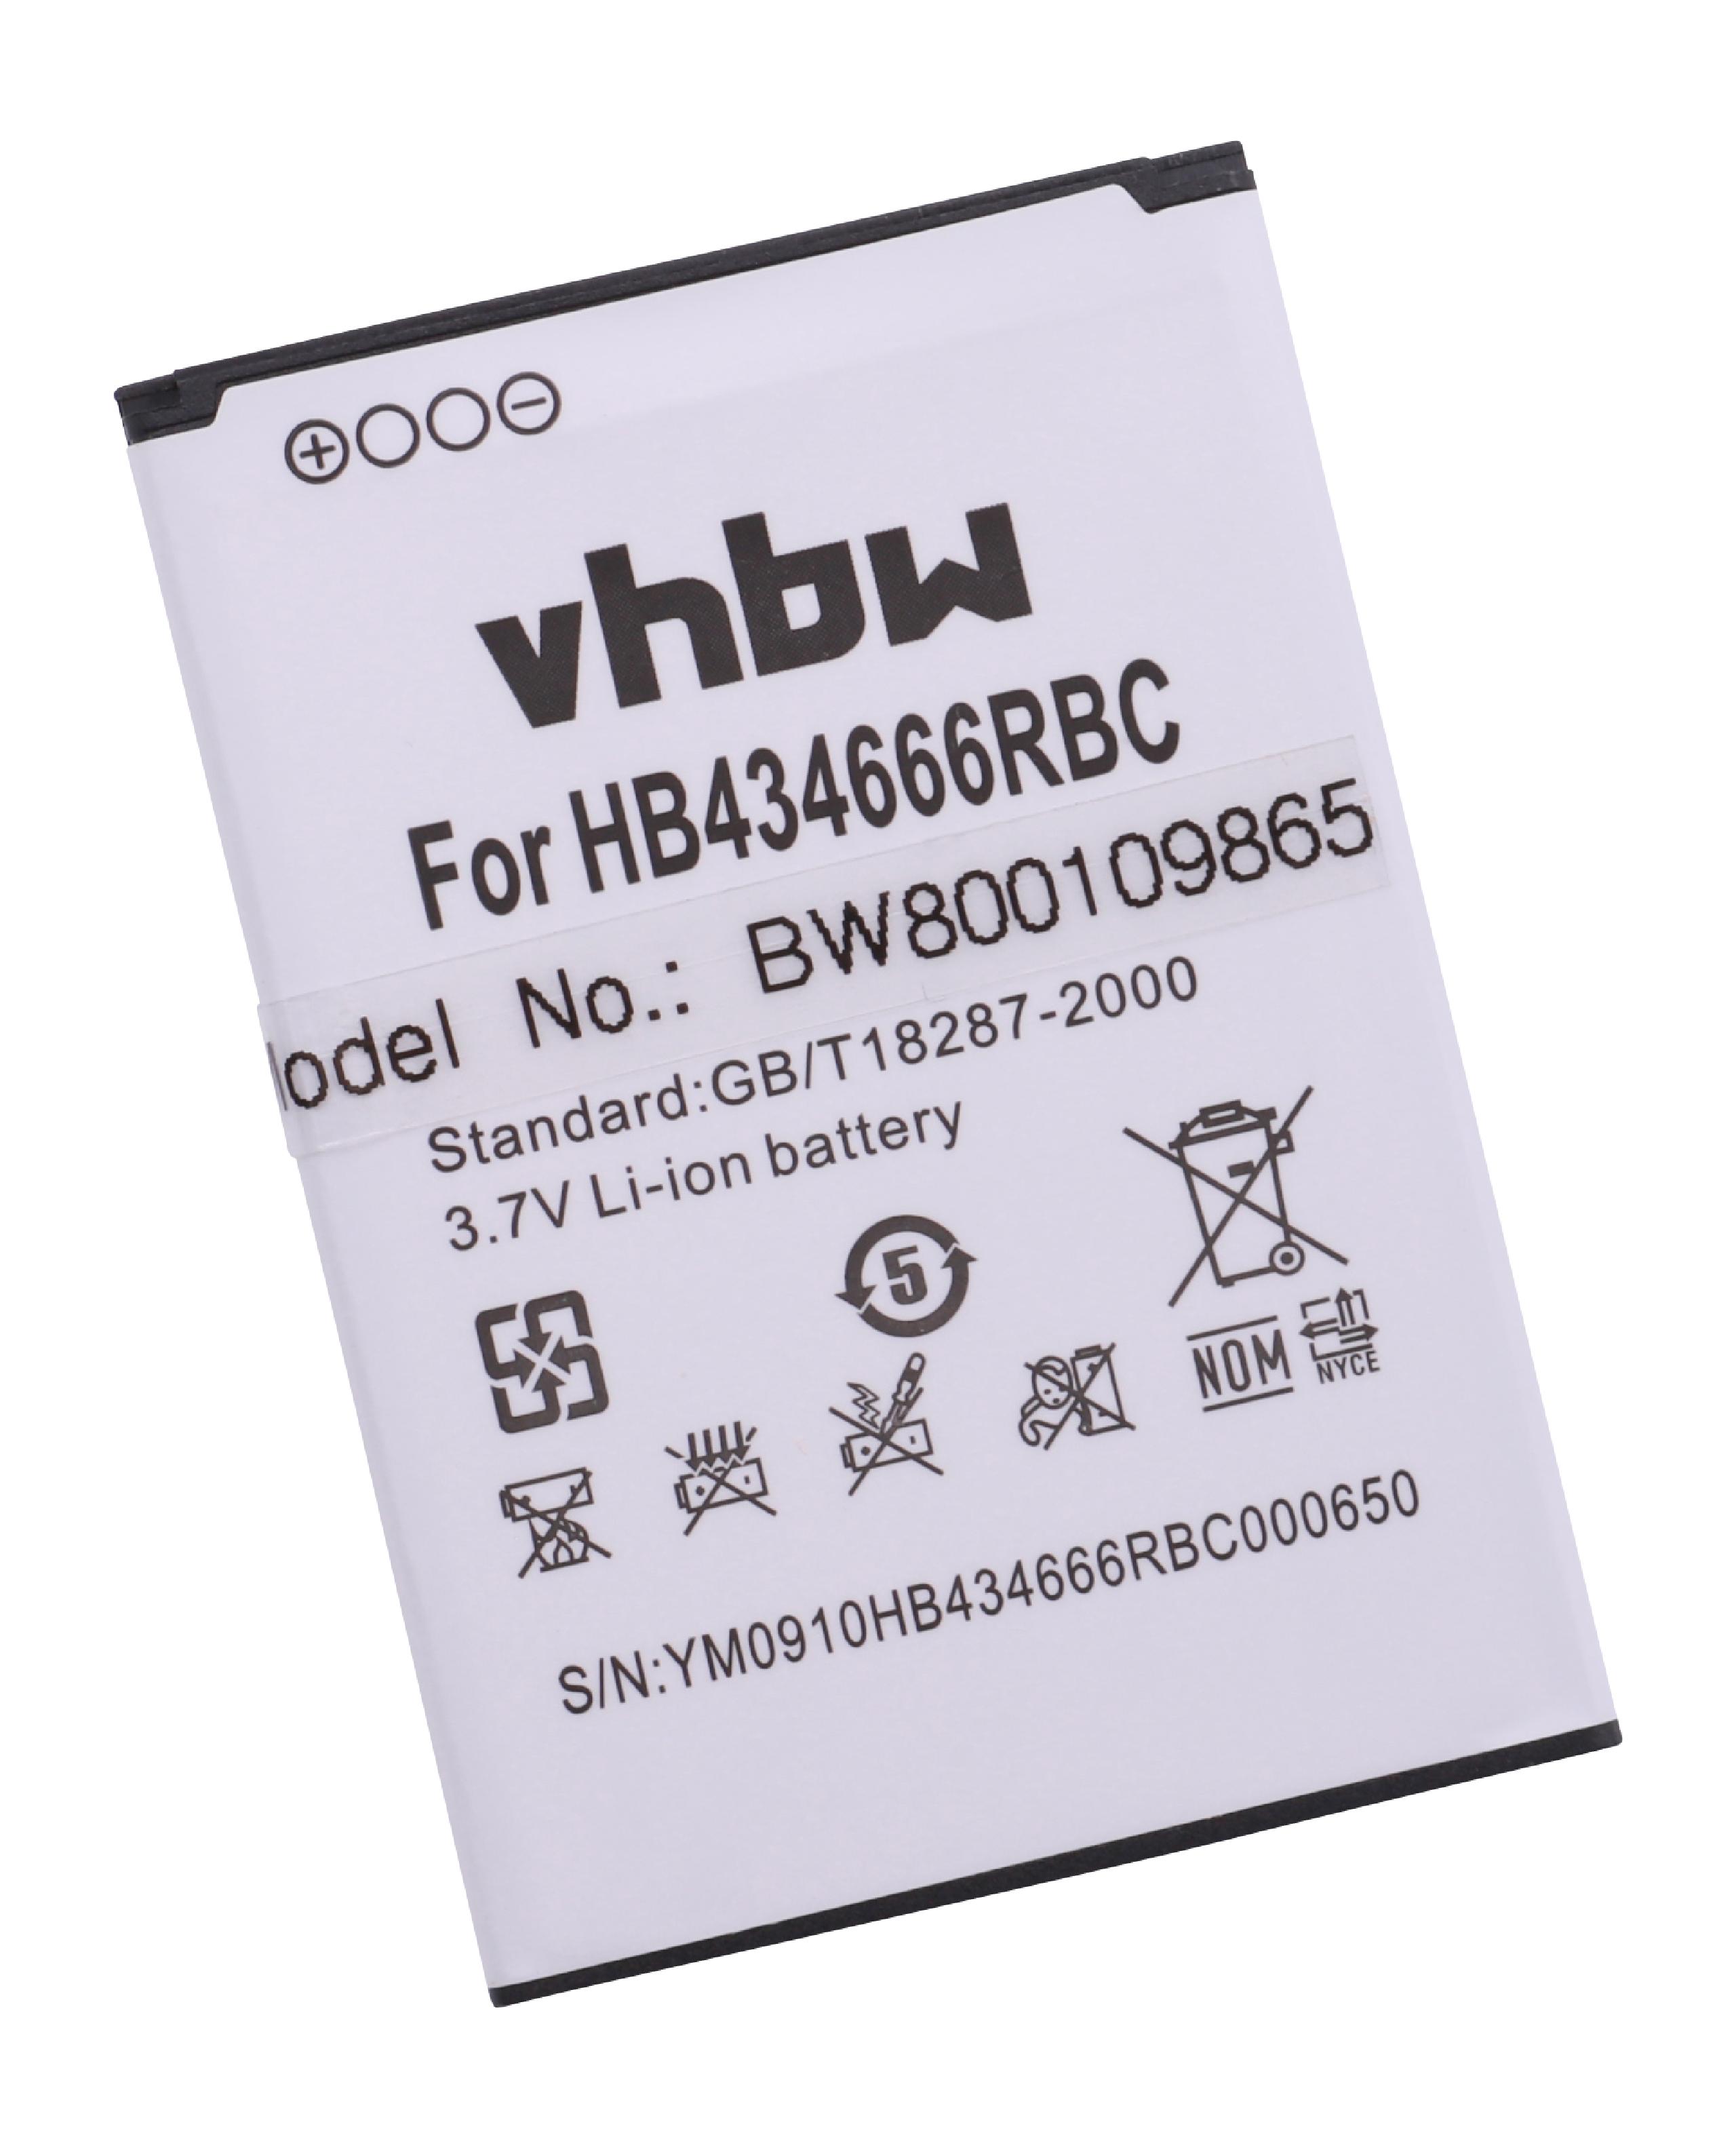 Batería reemplaza Huawei HB434666RBC, HB434666RAW para router Vodafone - 1500 mAh 3,7 V Li-Ion